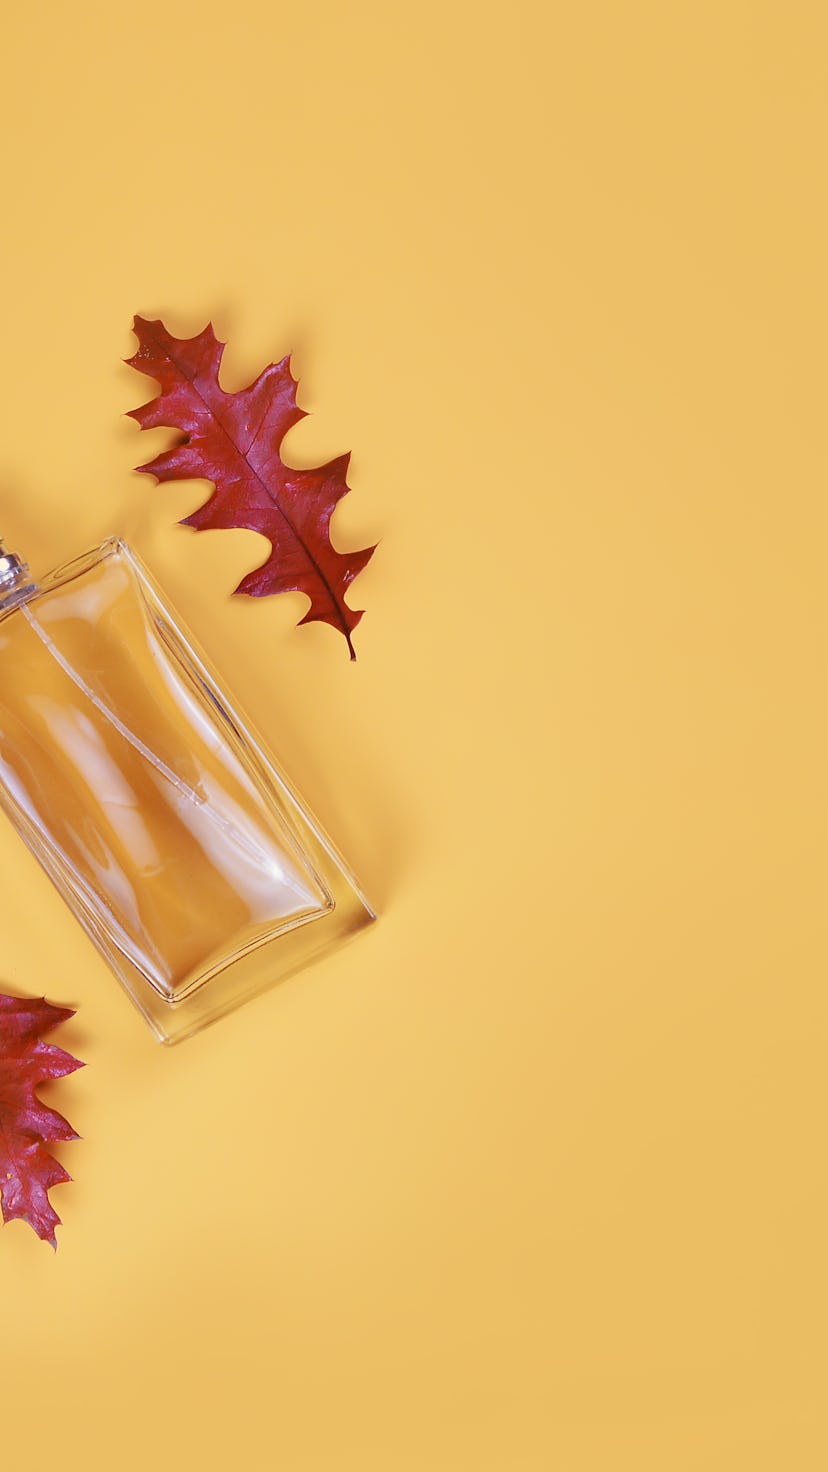 Eau de toilette in a transparent bottle and autumn red leaves oak lies beautifully on a yellow backg...